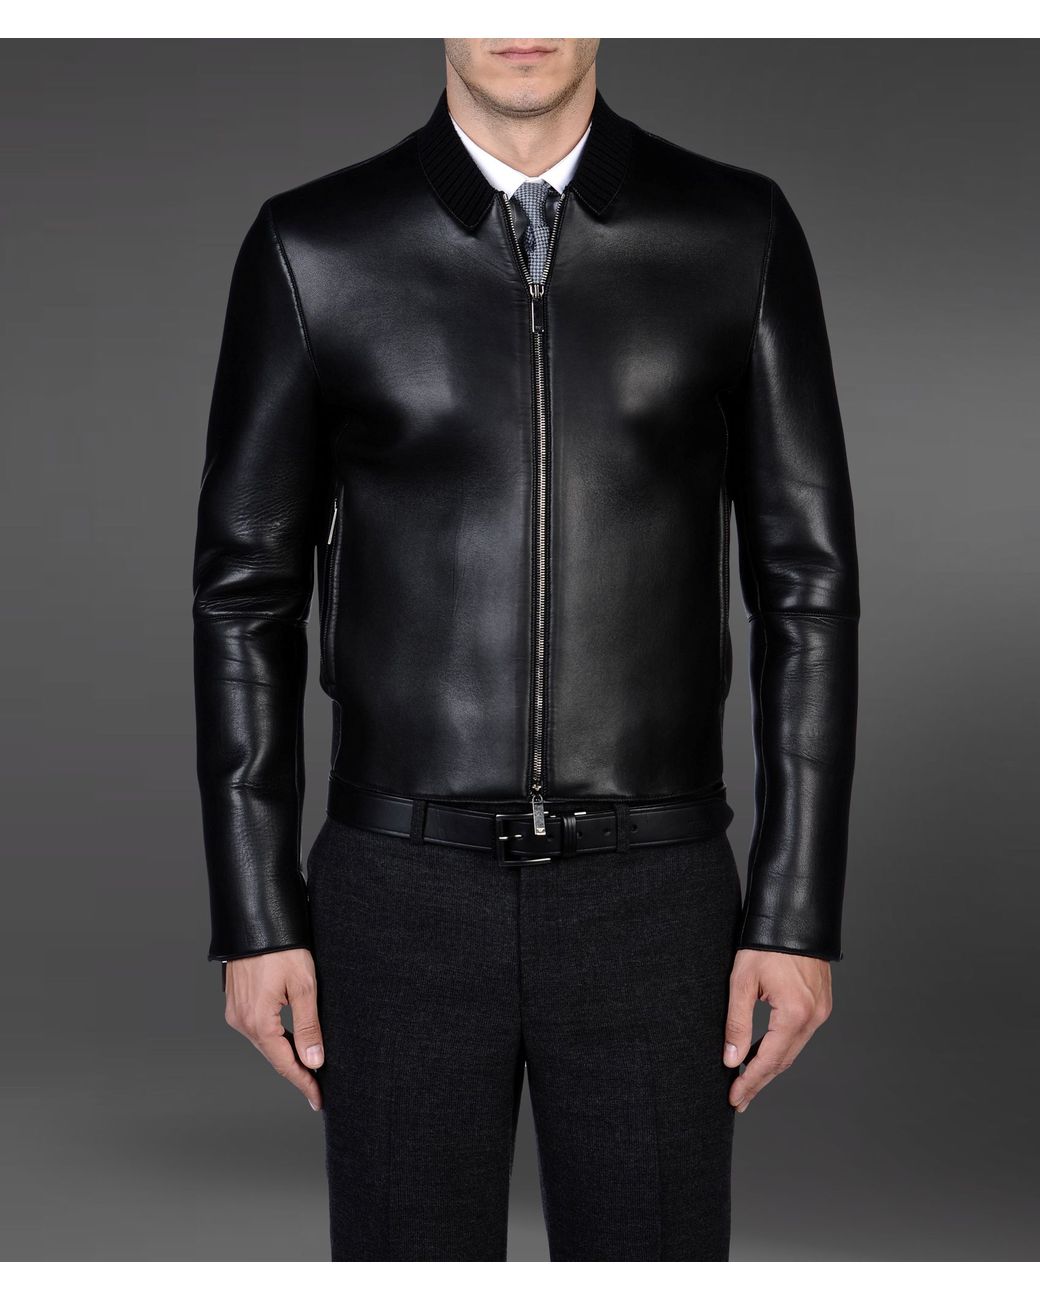 Total 34+ imagen armani mens leather jackets